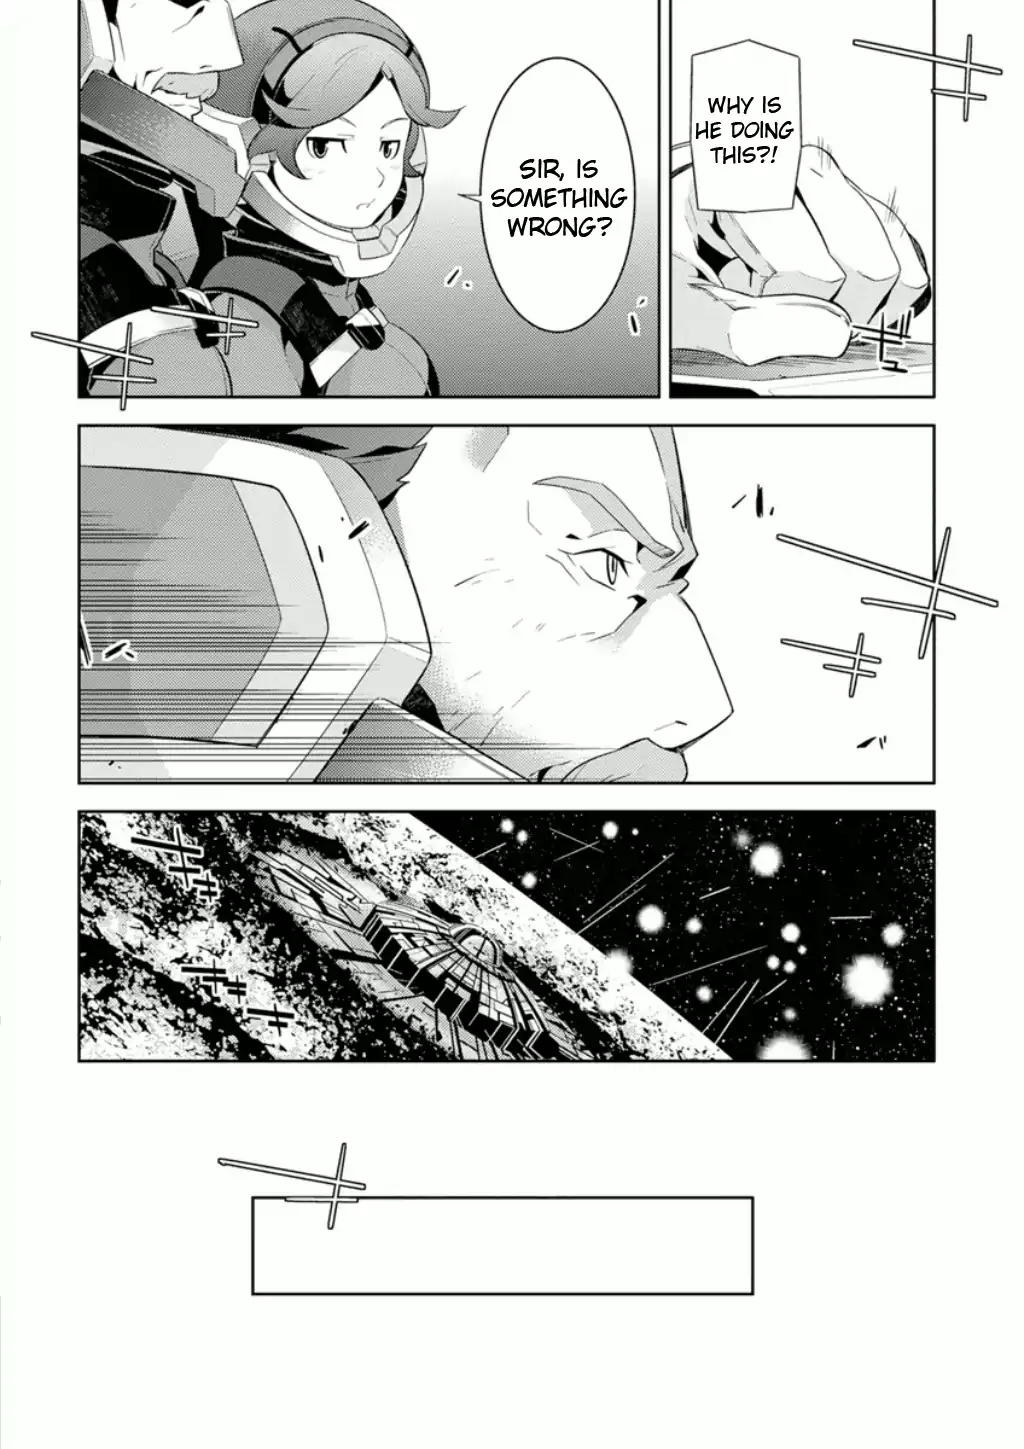 Mobile Suit Gundam AGE - Final Evolution Vol.1 Chapter 2: